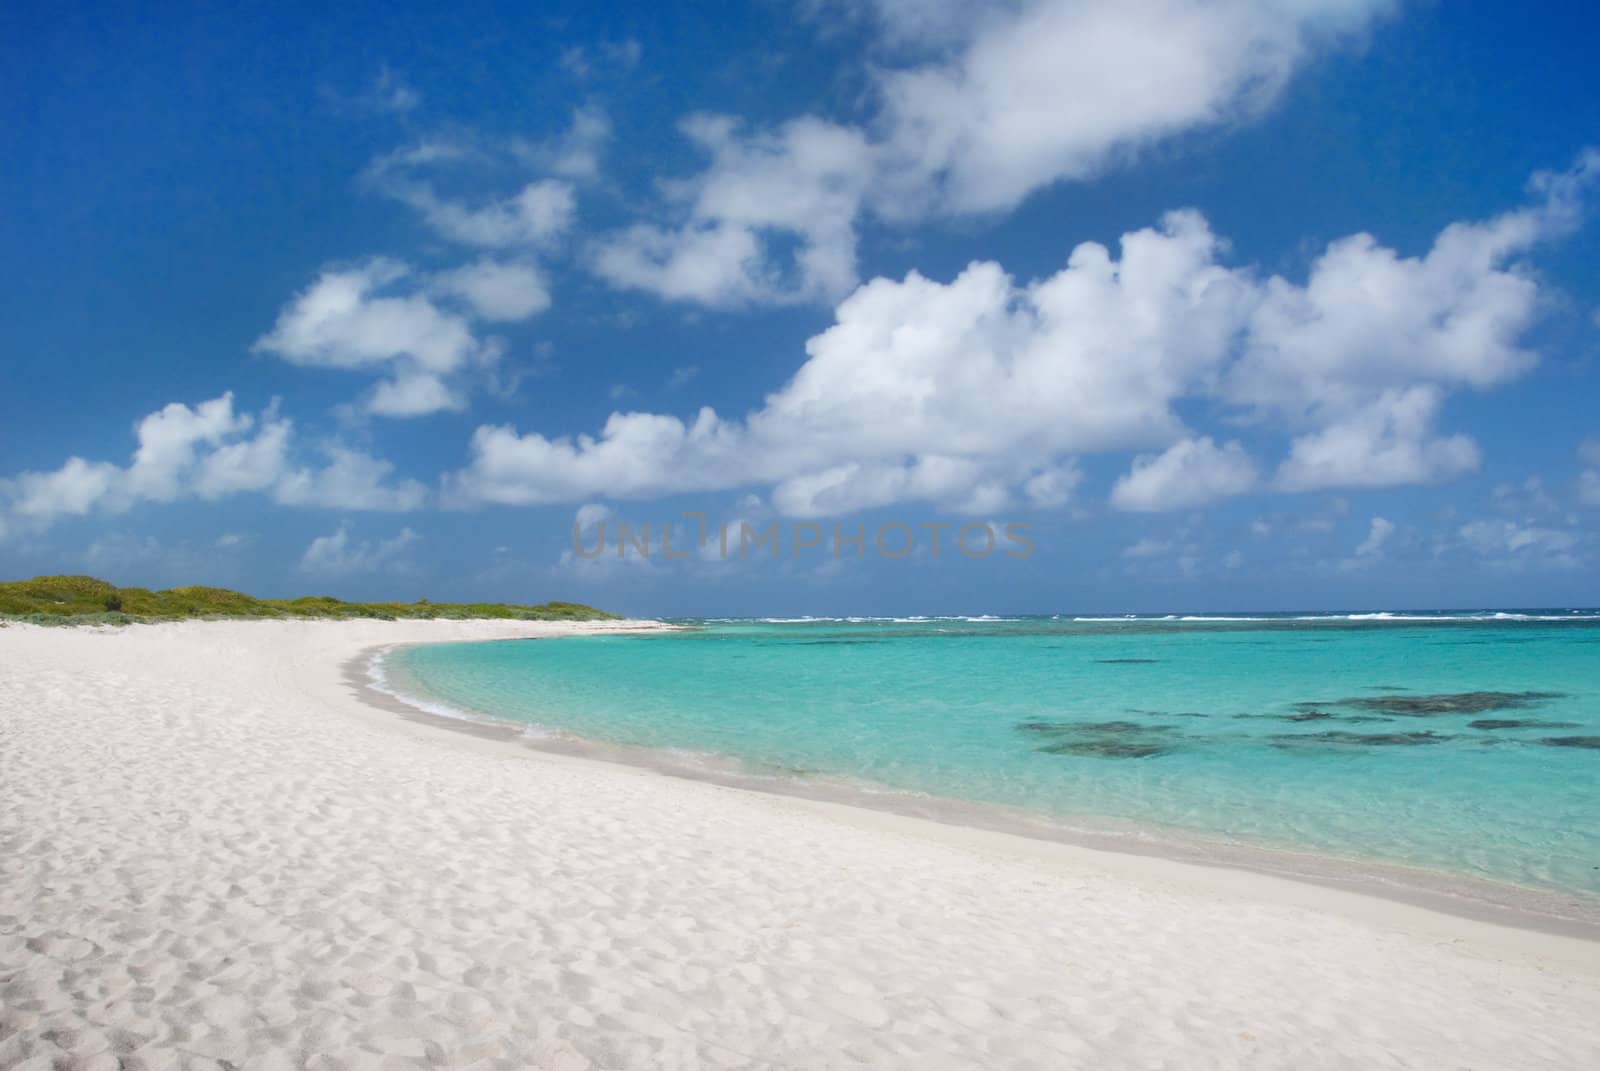 Sandy Caribbean beach with aqua water and blue cloudy sky